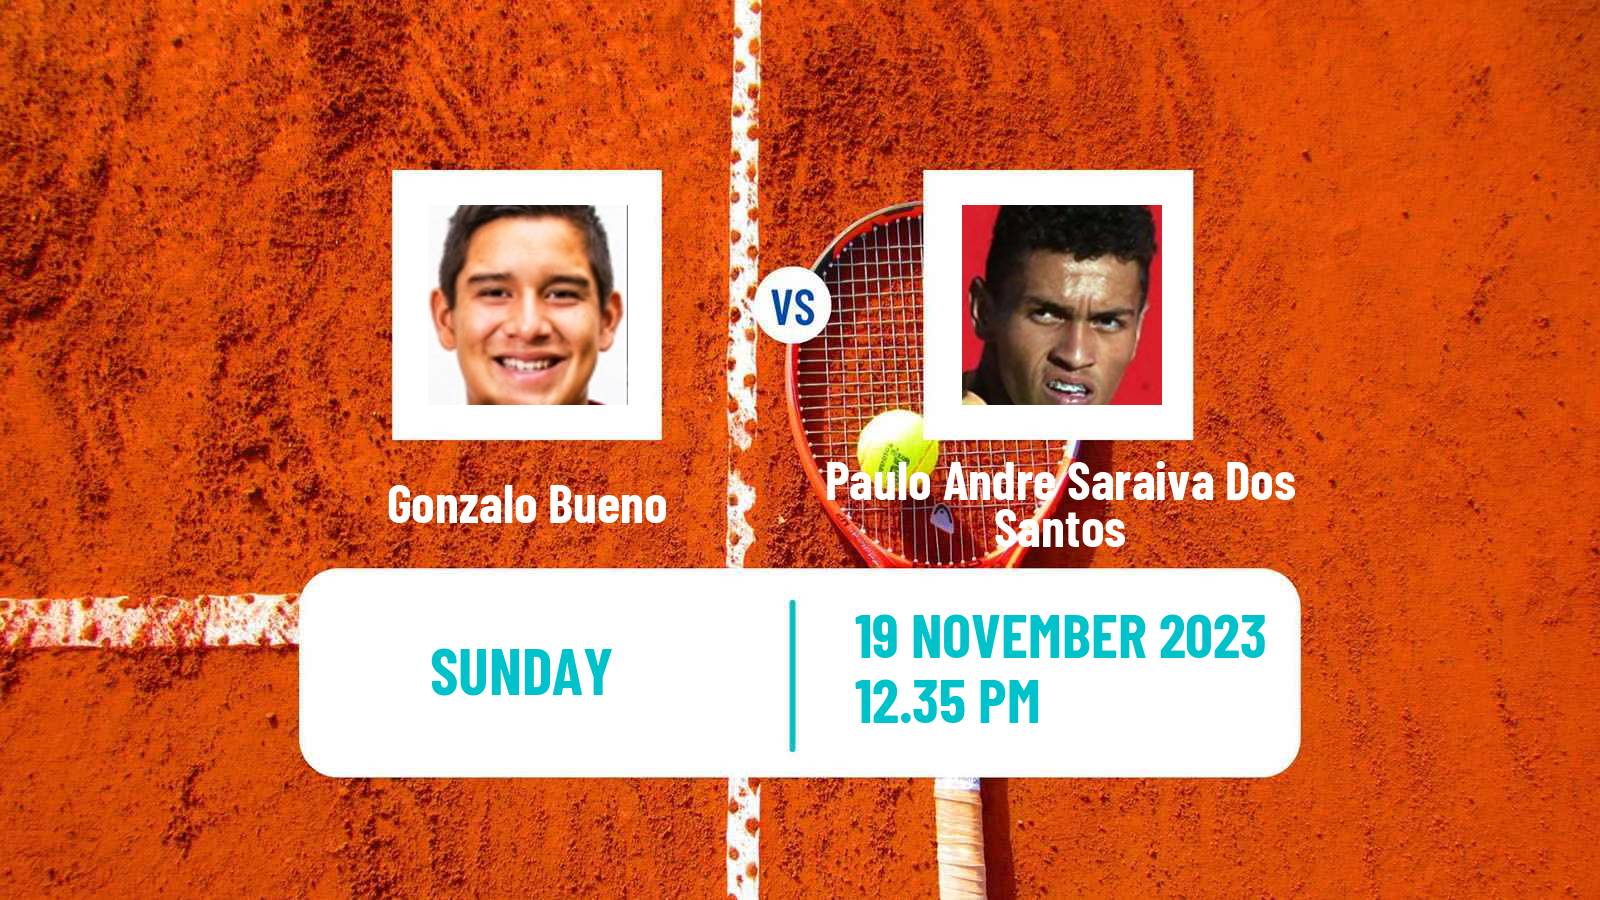 Tennis Brasilia Challenger Men 2023 Gonzalo Bueno - Paulo Andre Saraiva Dos Santos